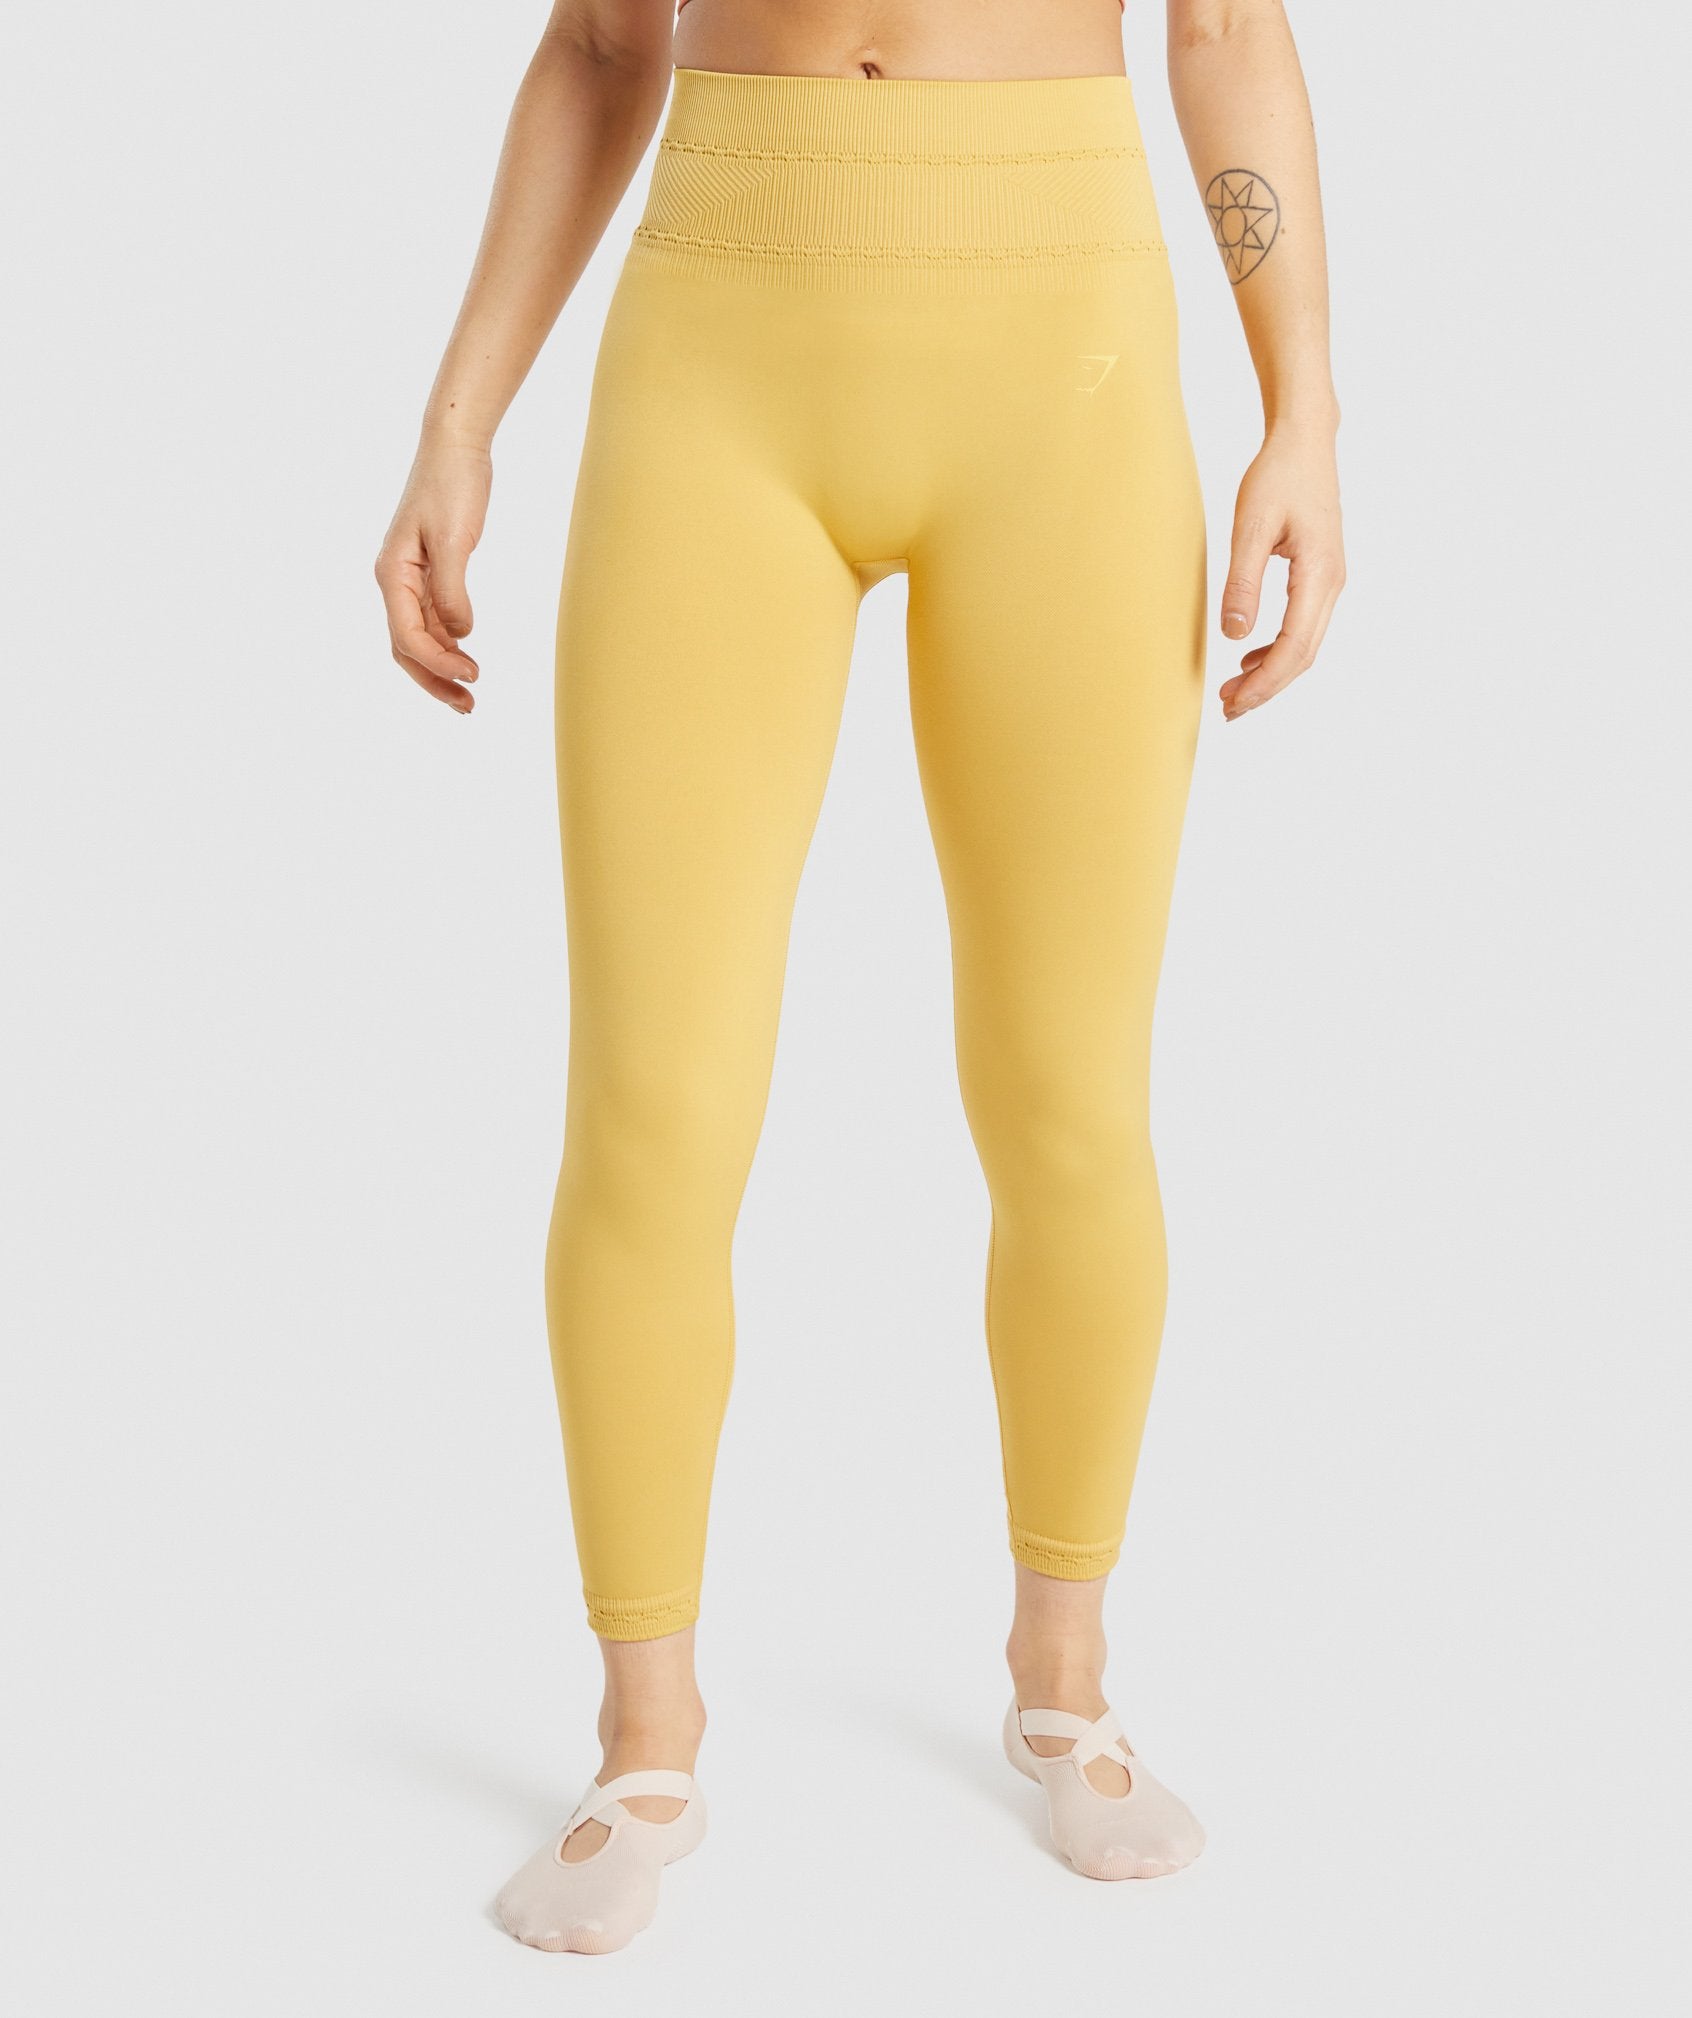 Gymshark - Yellow Gym Shark Set on Designer Wardrobe